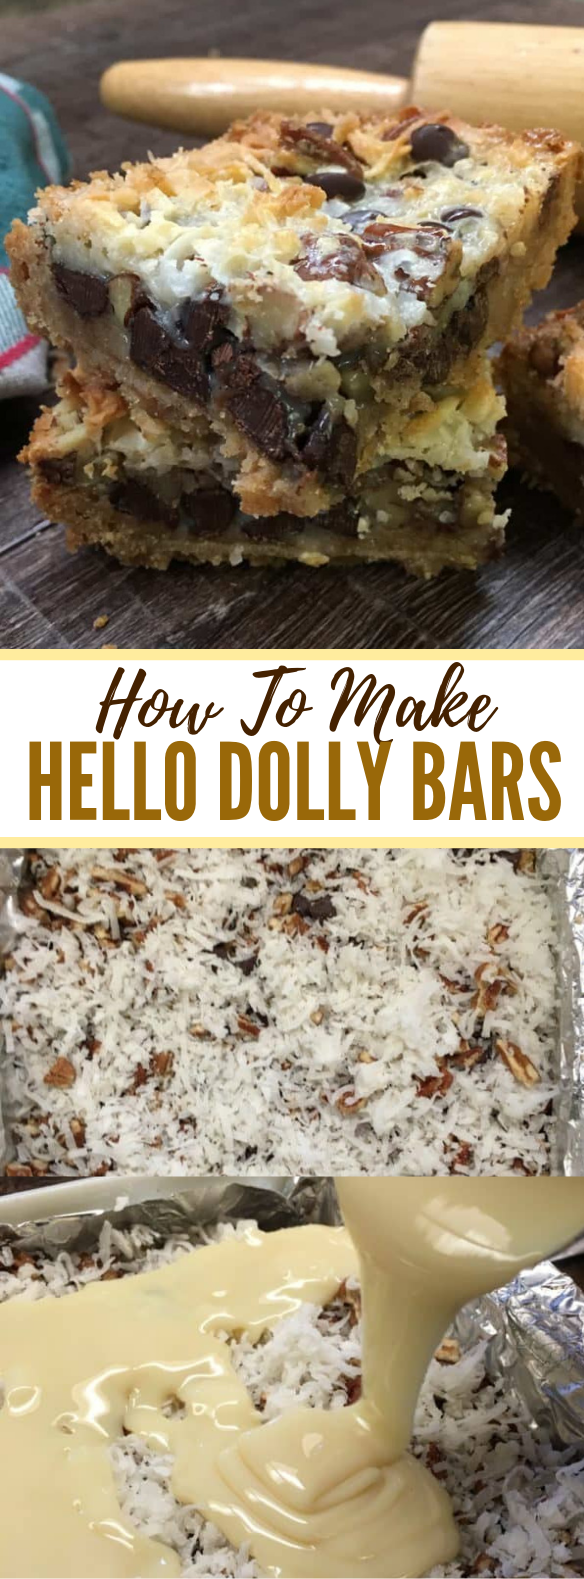 How to Make Hello Dolly Bars #dessert #cokkiebars